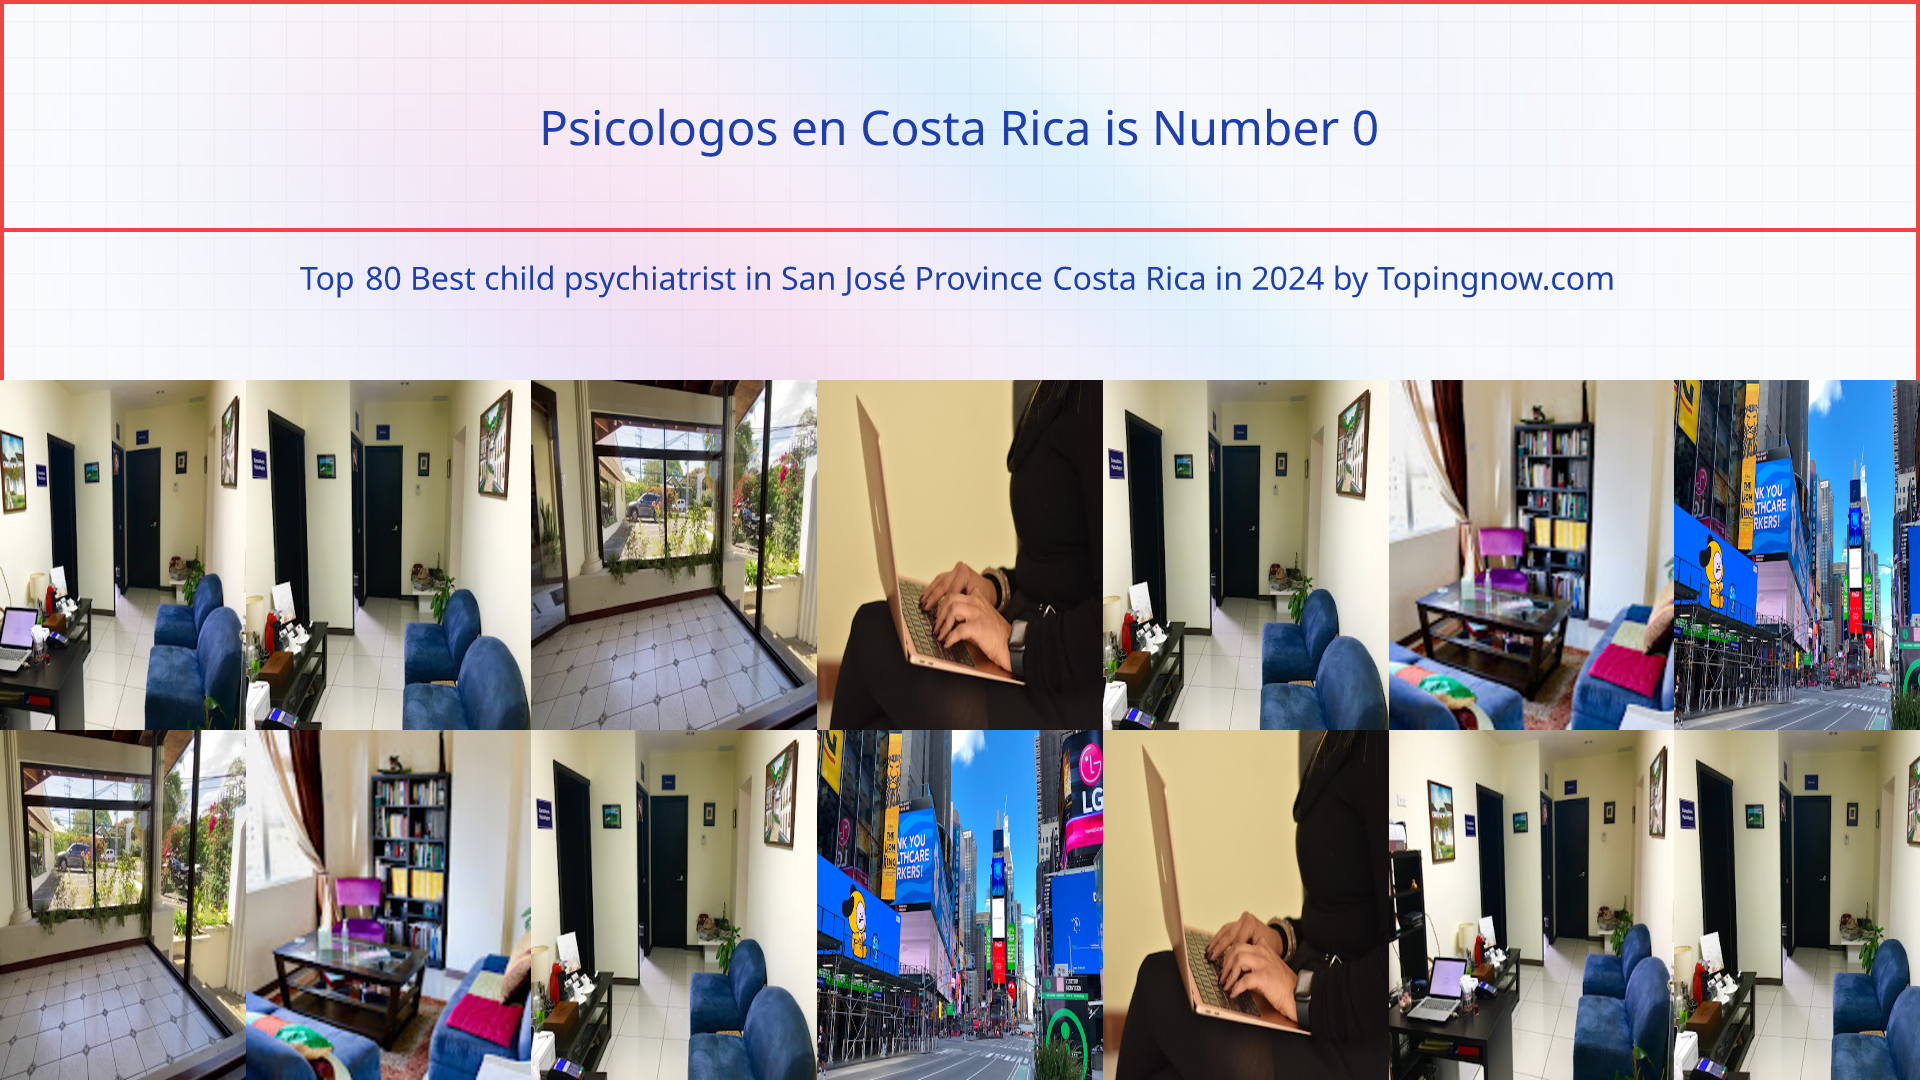 Psicologos en Costa Rica: Top 80 Best child psychiatrist in San José Province Costa Rica in 2024